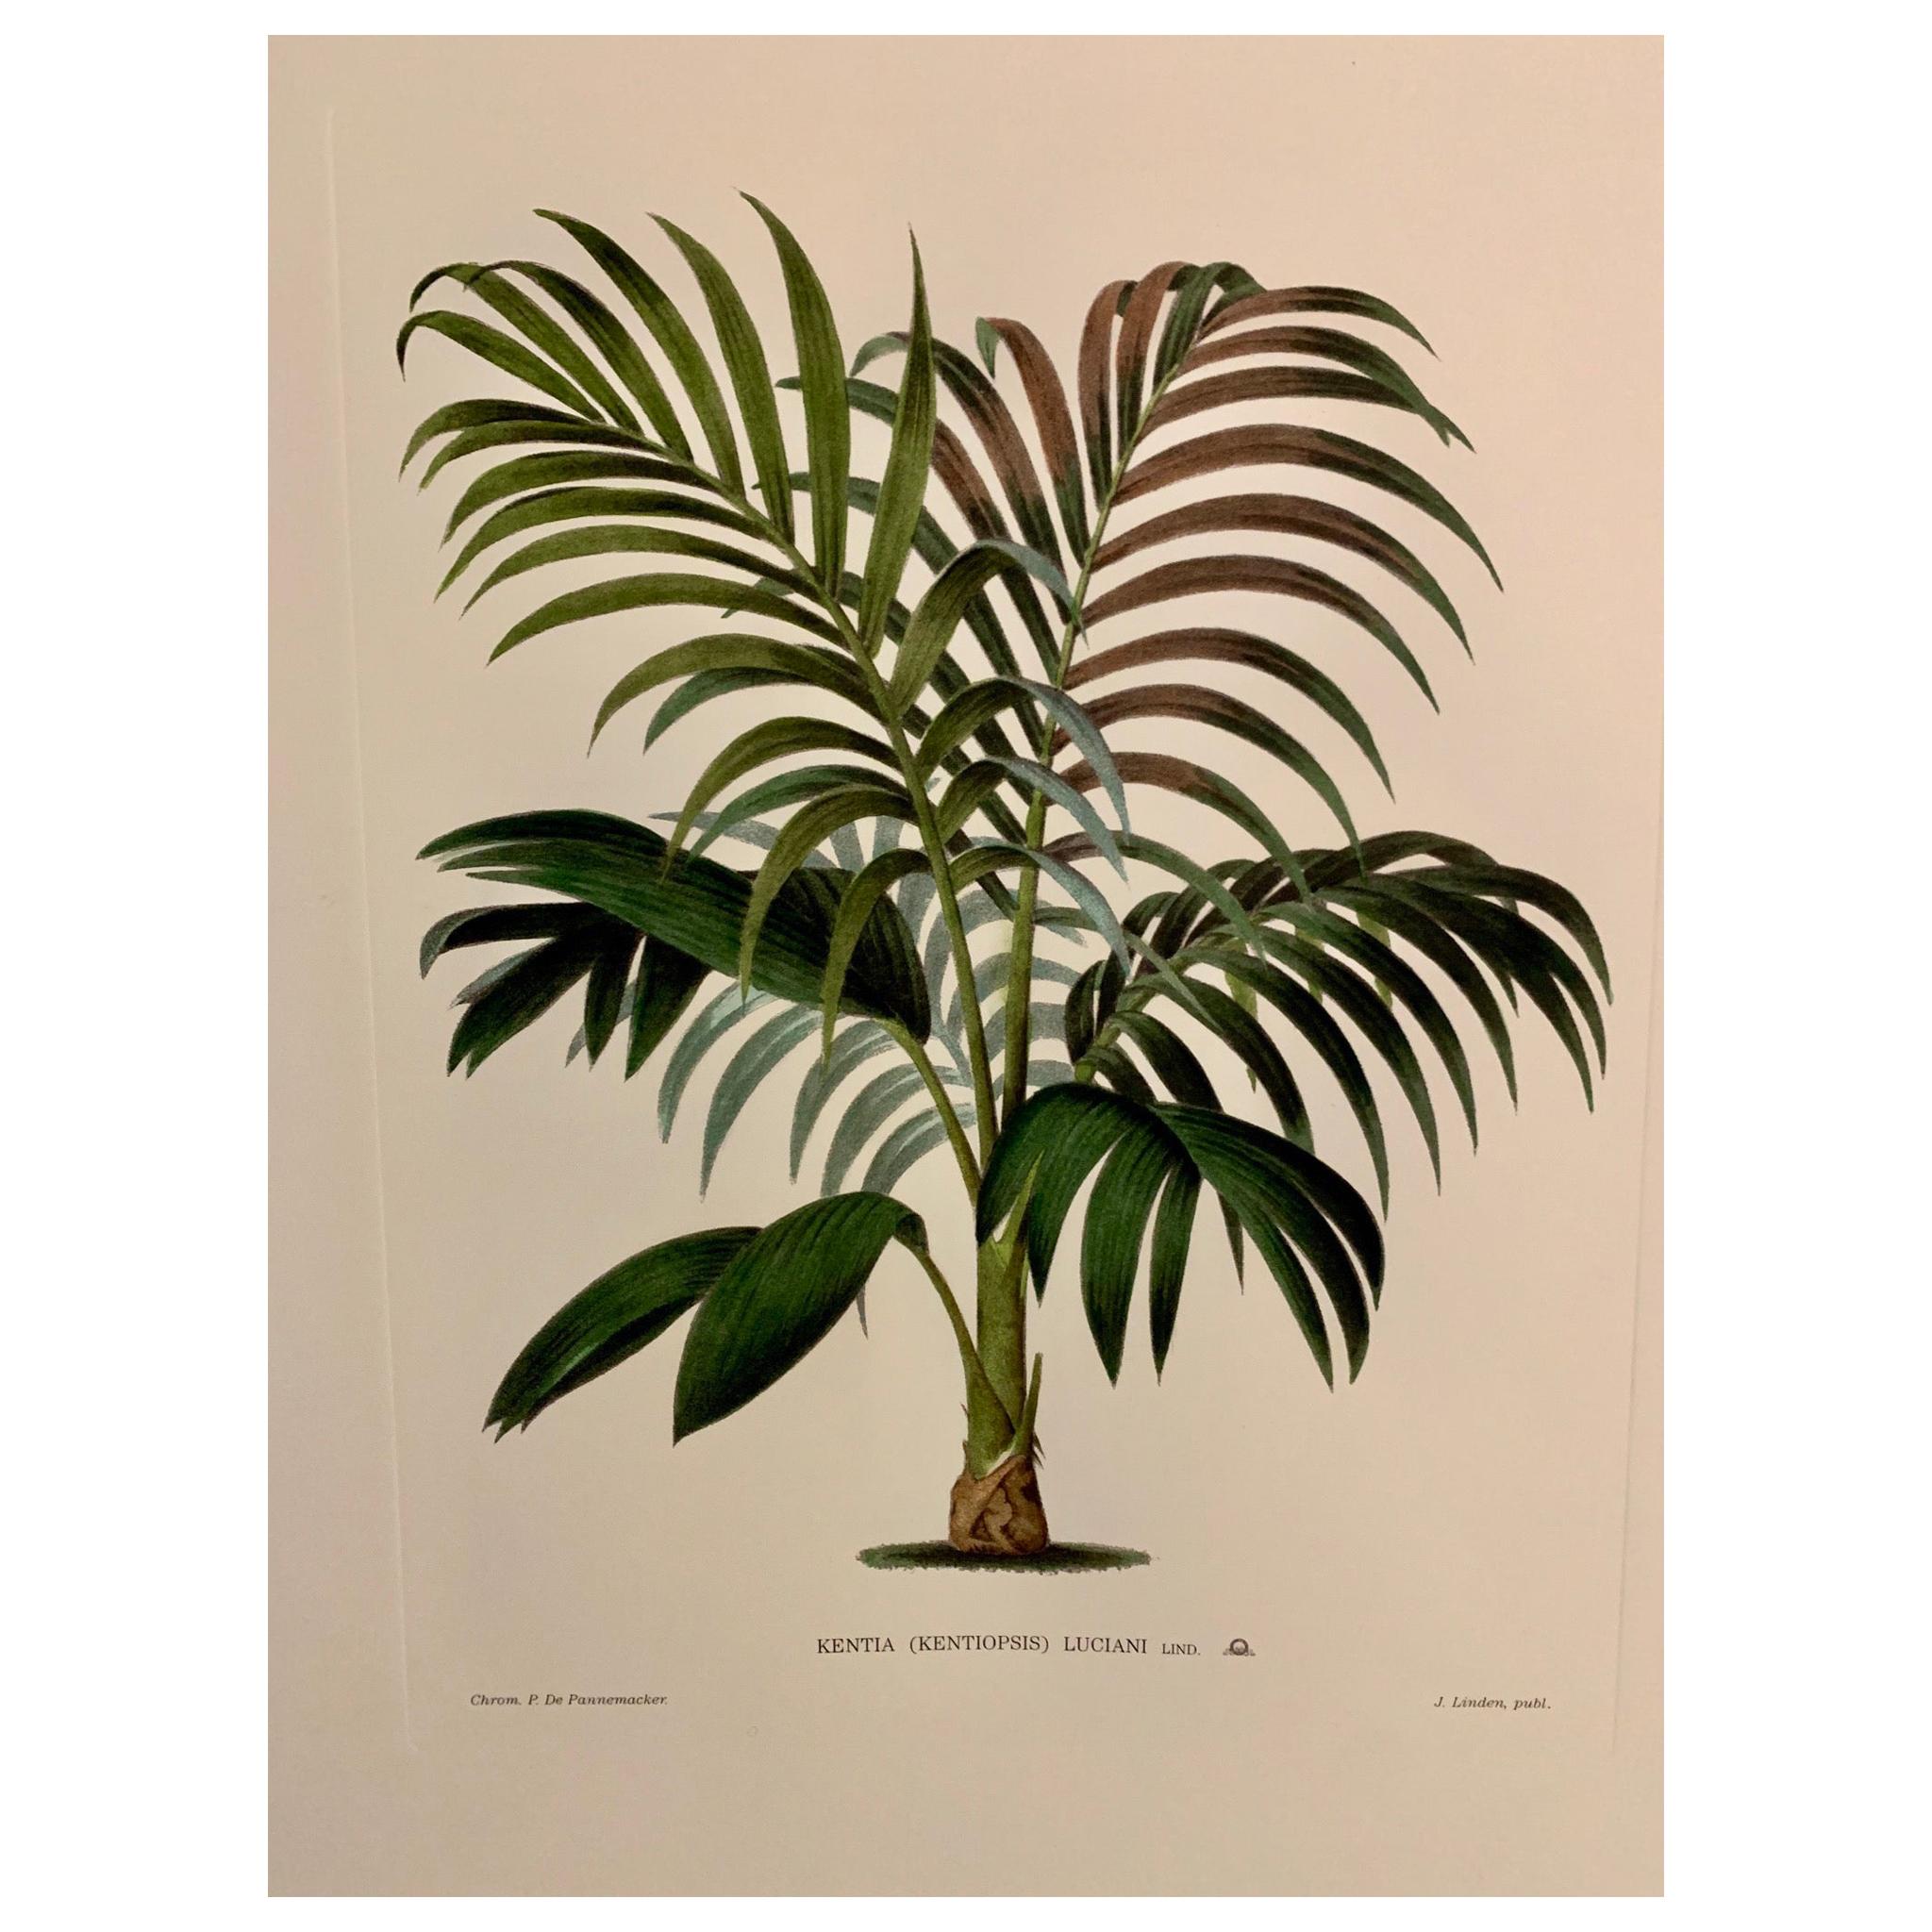 Italian Contemporary Hand Painted Botanical Print "Kentia Luciani" 1 of 6